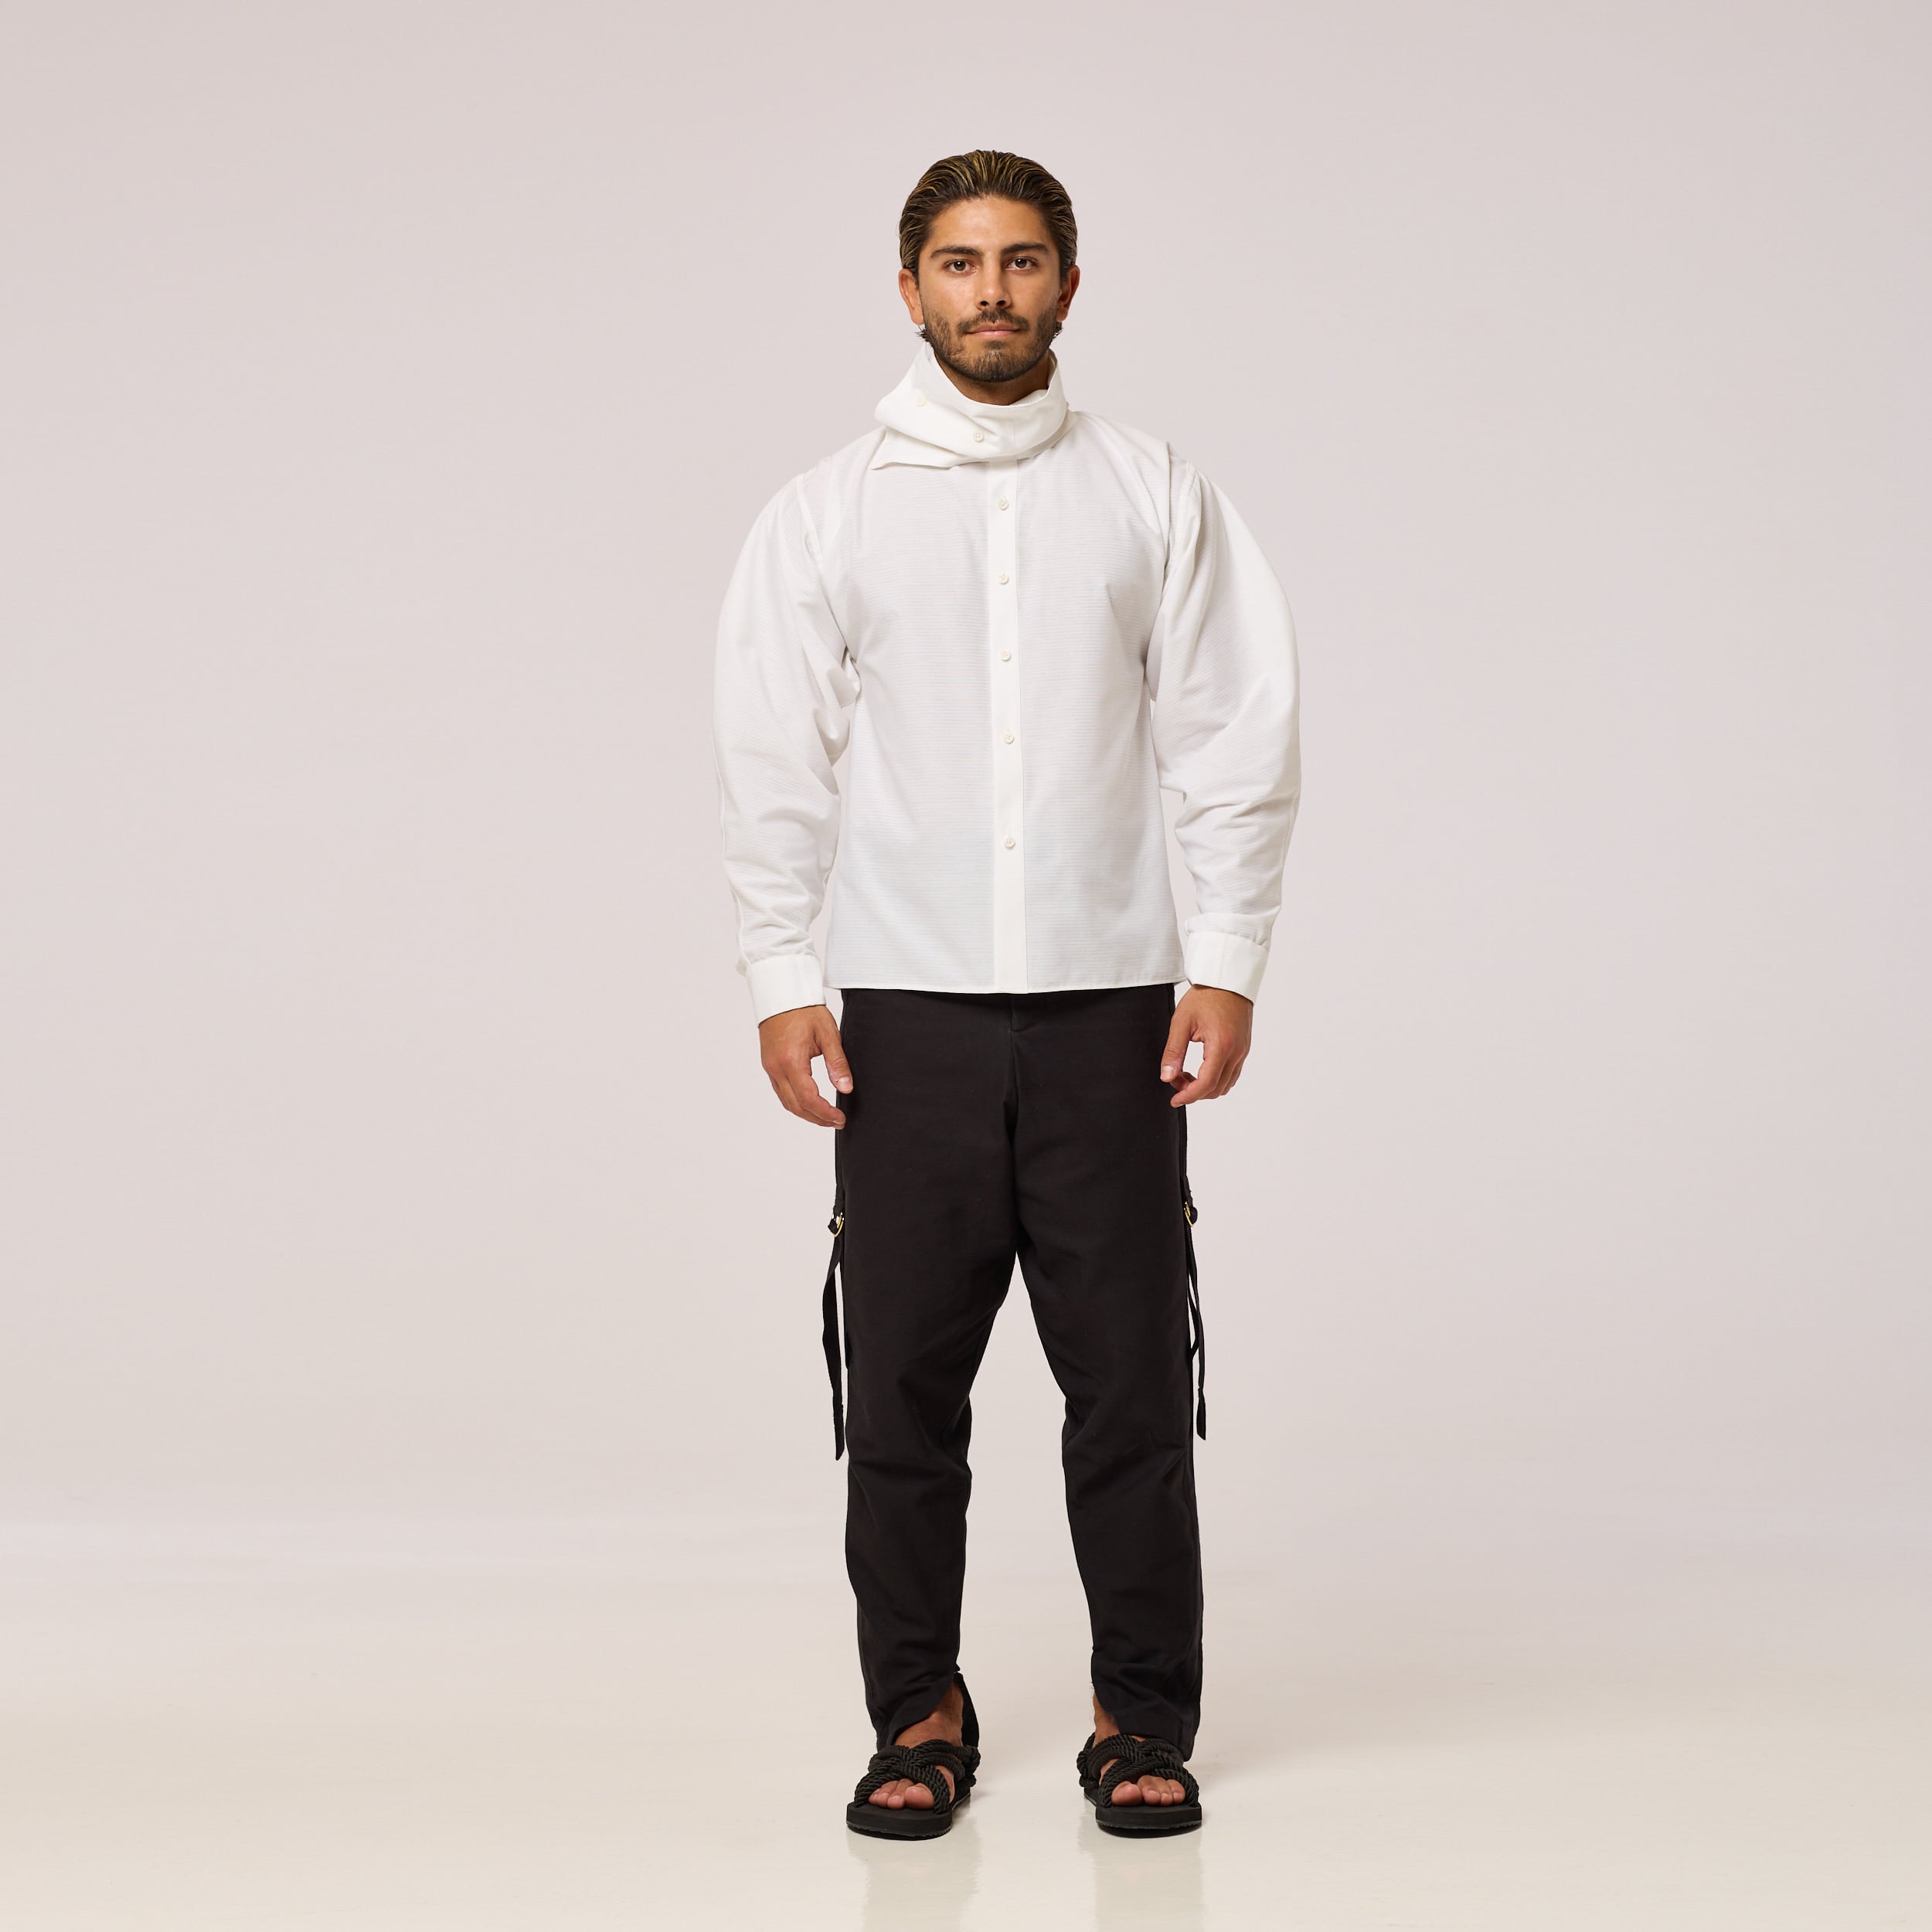 ZERØ London - Front full length view, white long sleeve mens zero waste shirt designed & made in London